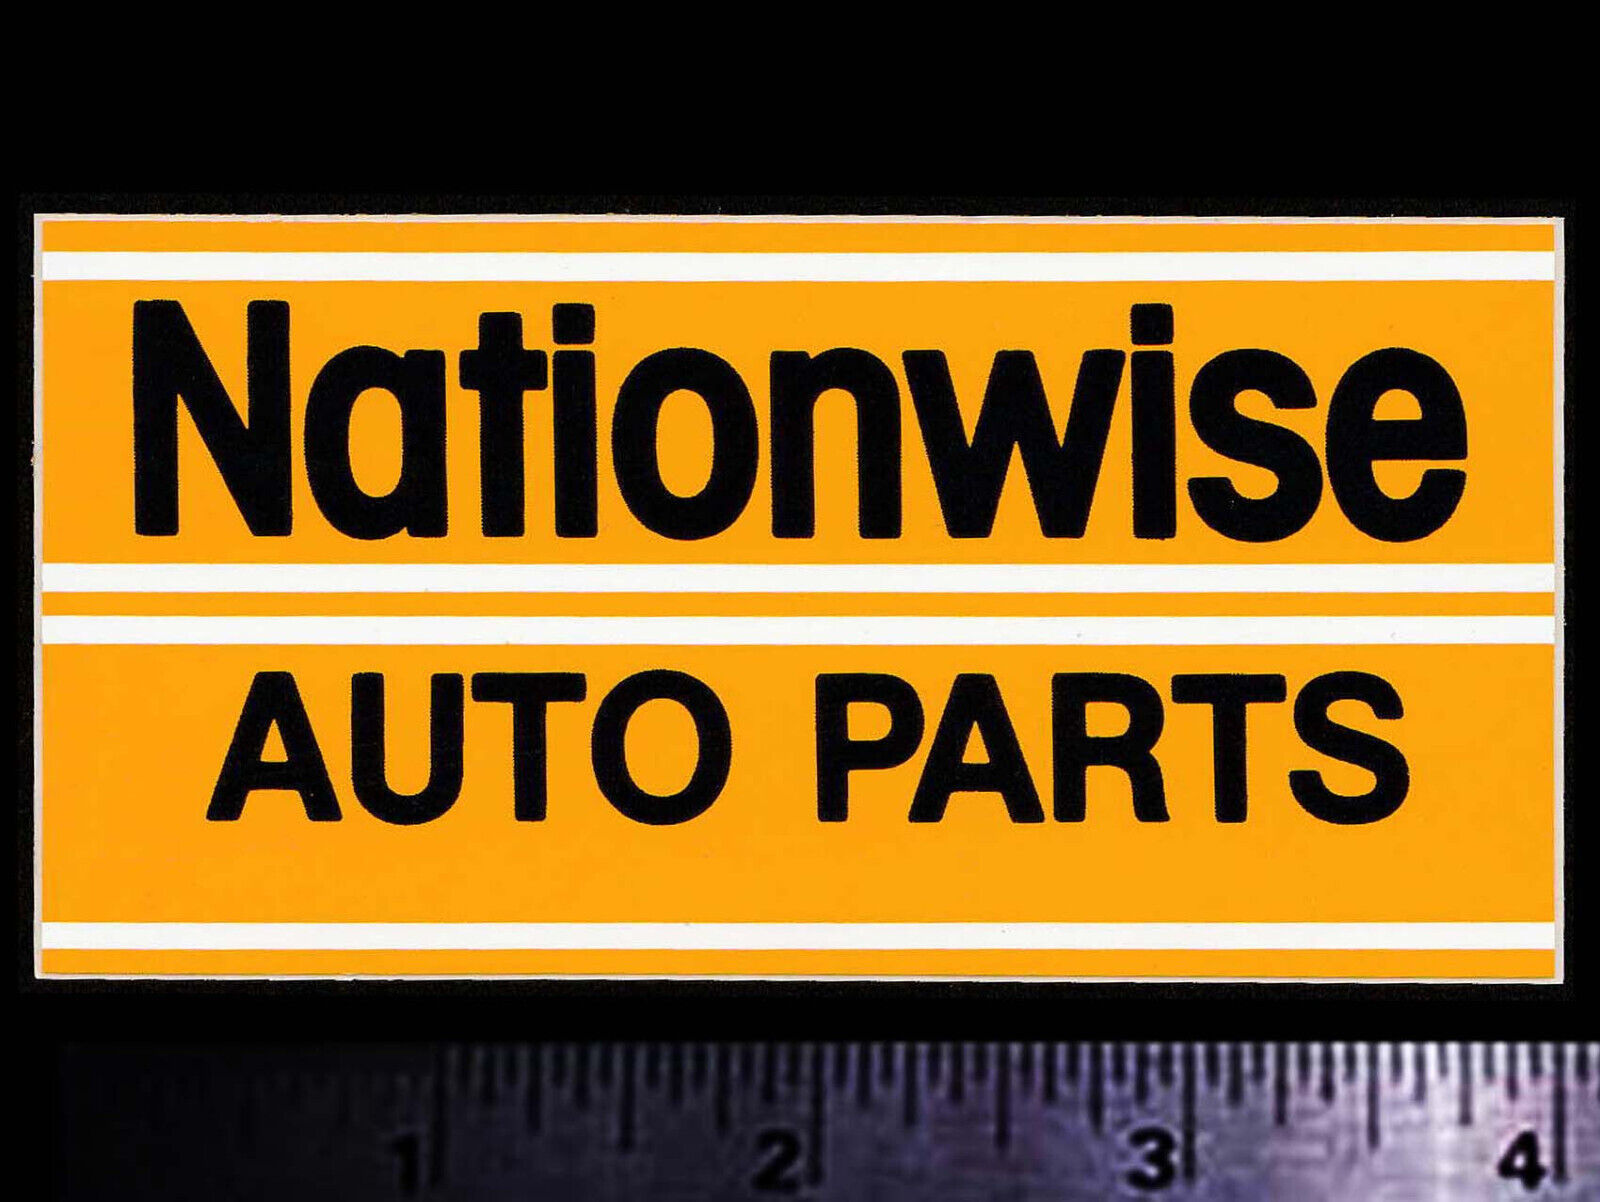 NATIONWISE Auto Parts - Original Vintage 1970's Racing Decal/Sticker